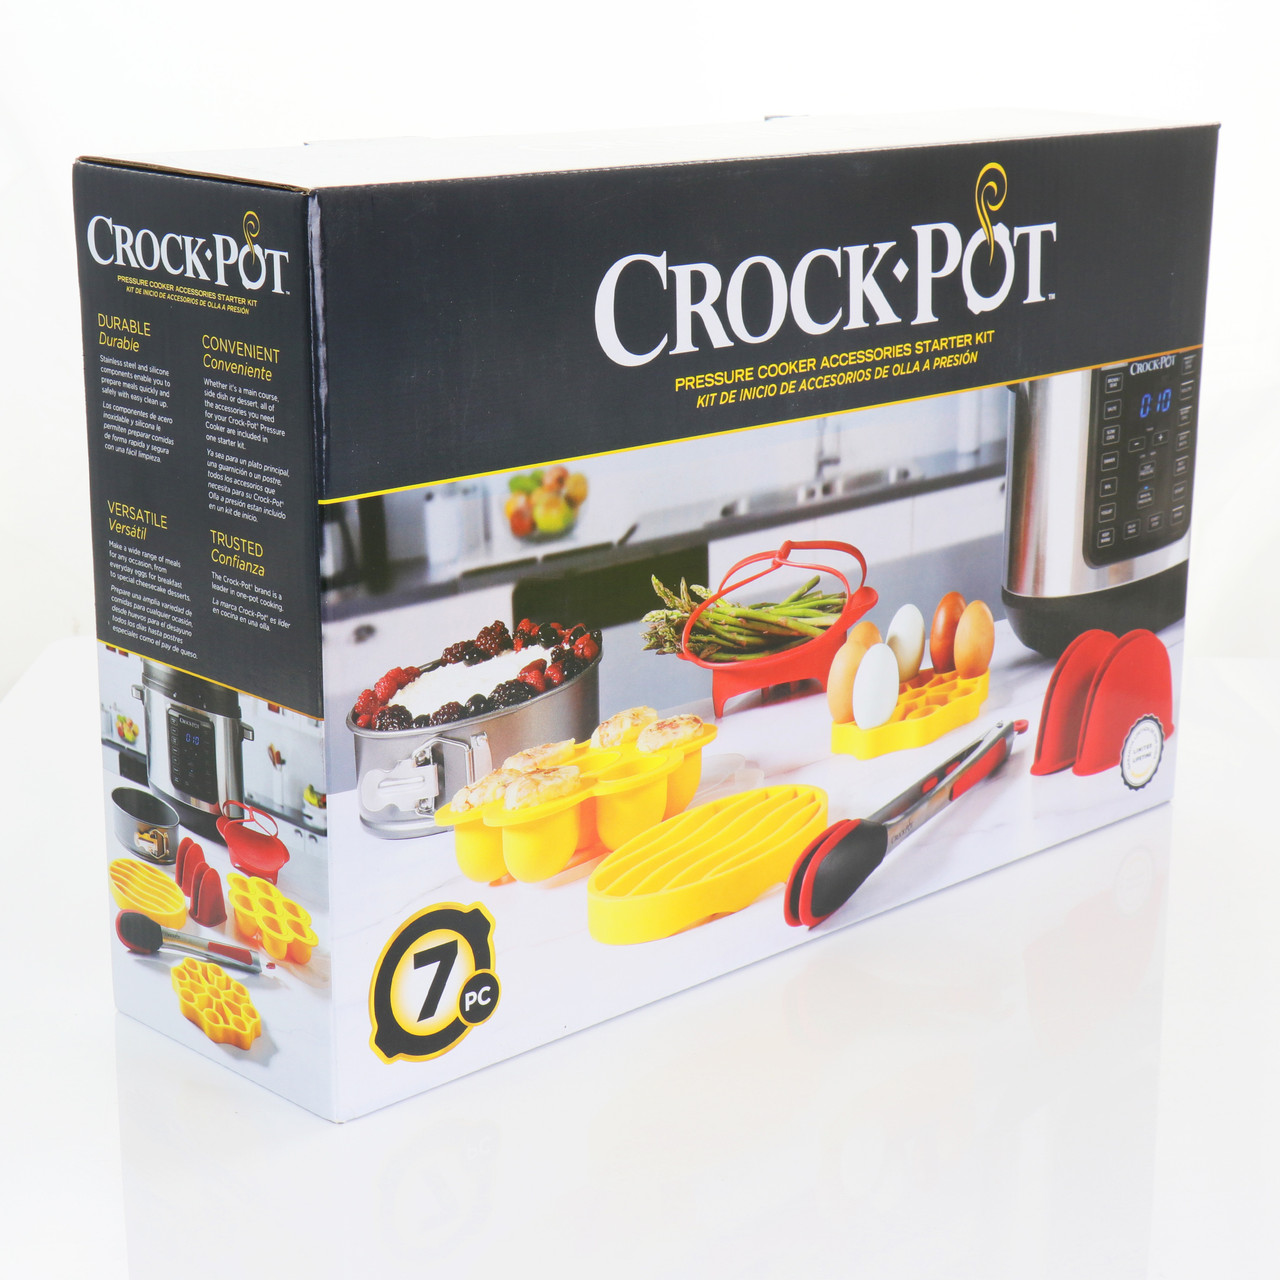 Crock-pot 7 Piece Pressure Cooker Accessories Starter Kit